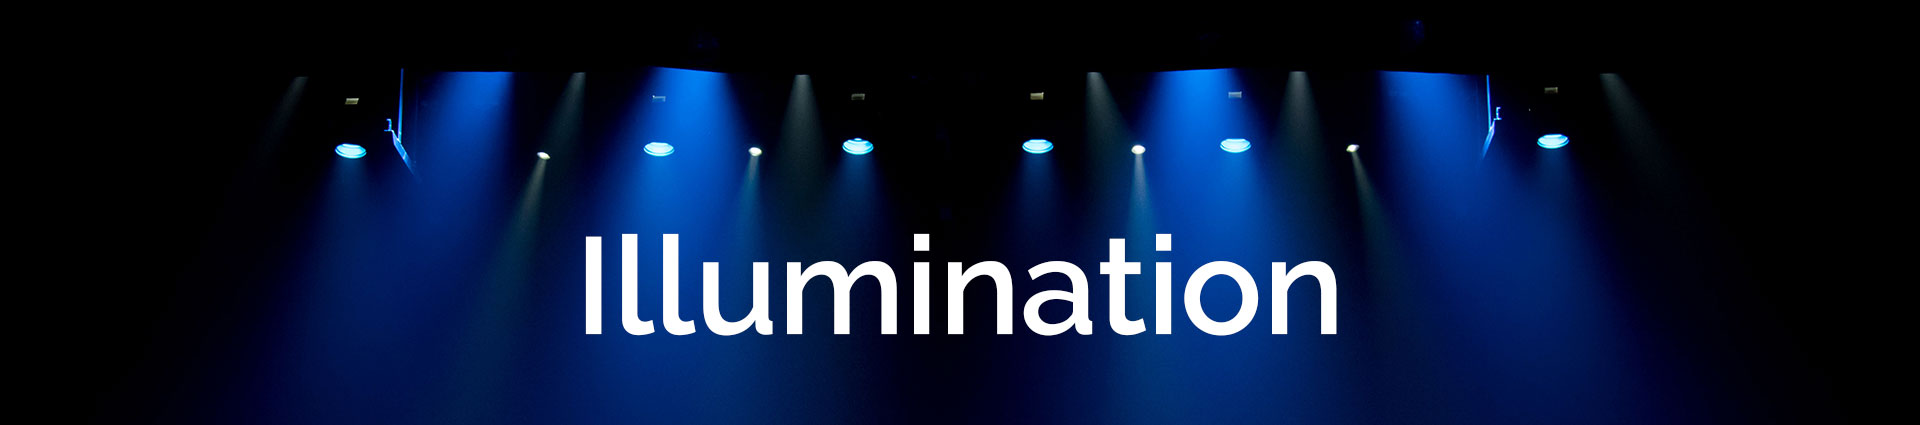 Illumination - DMCS Show Choir Invitational